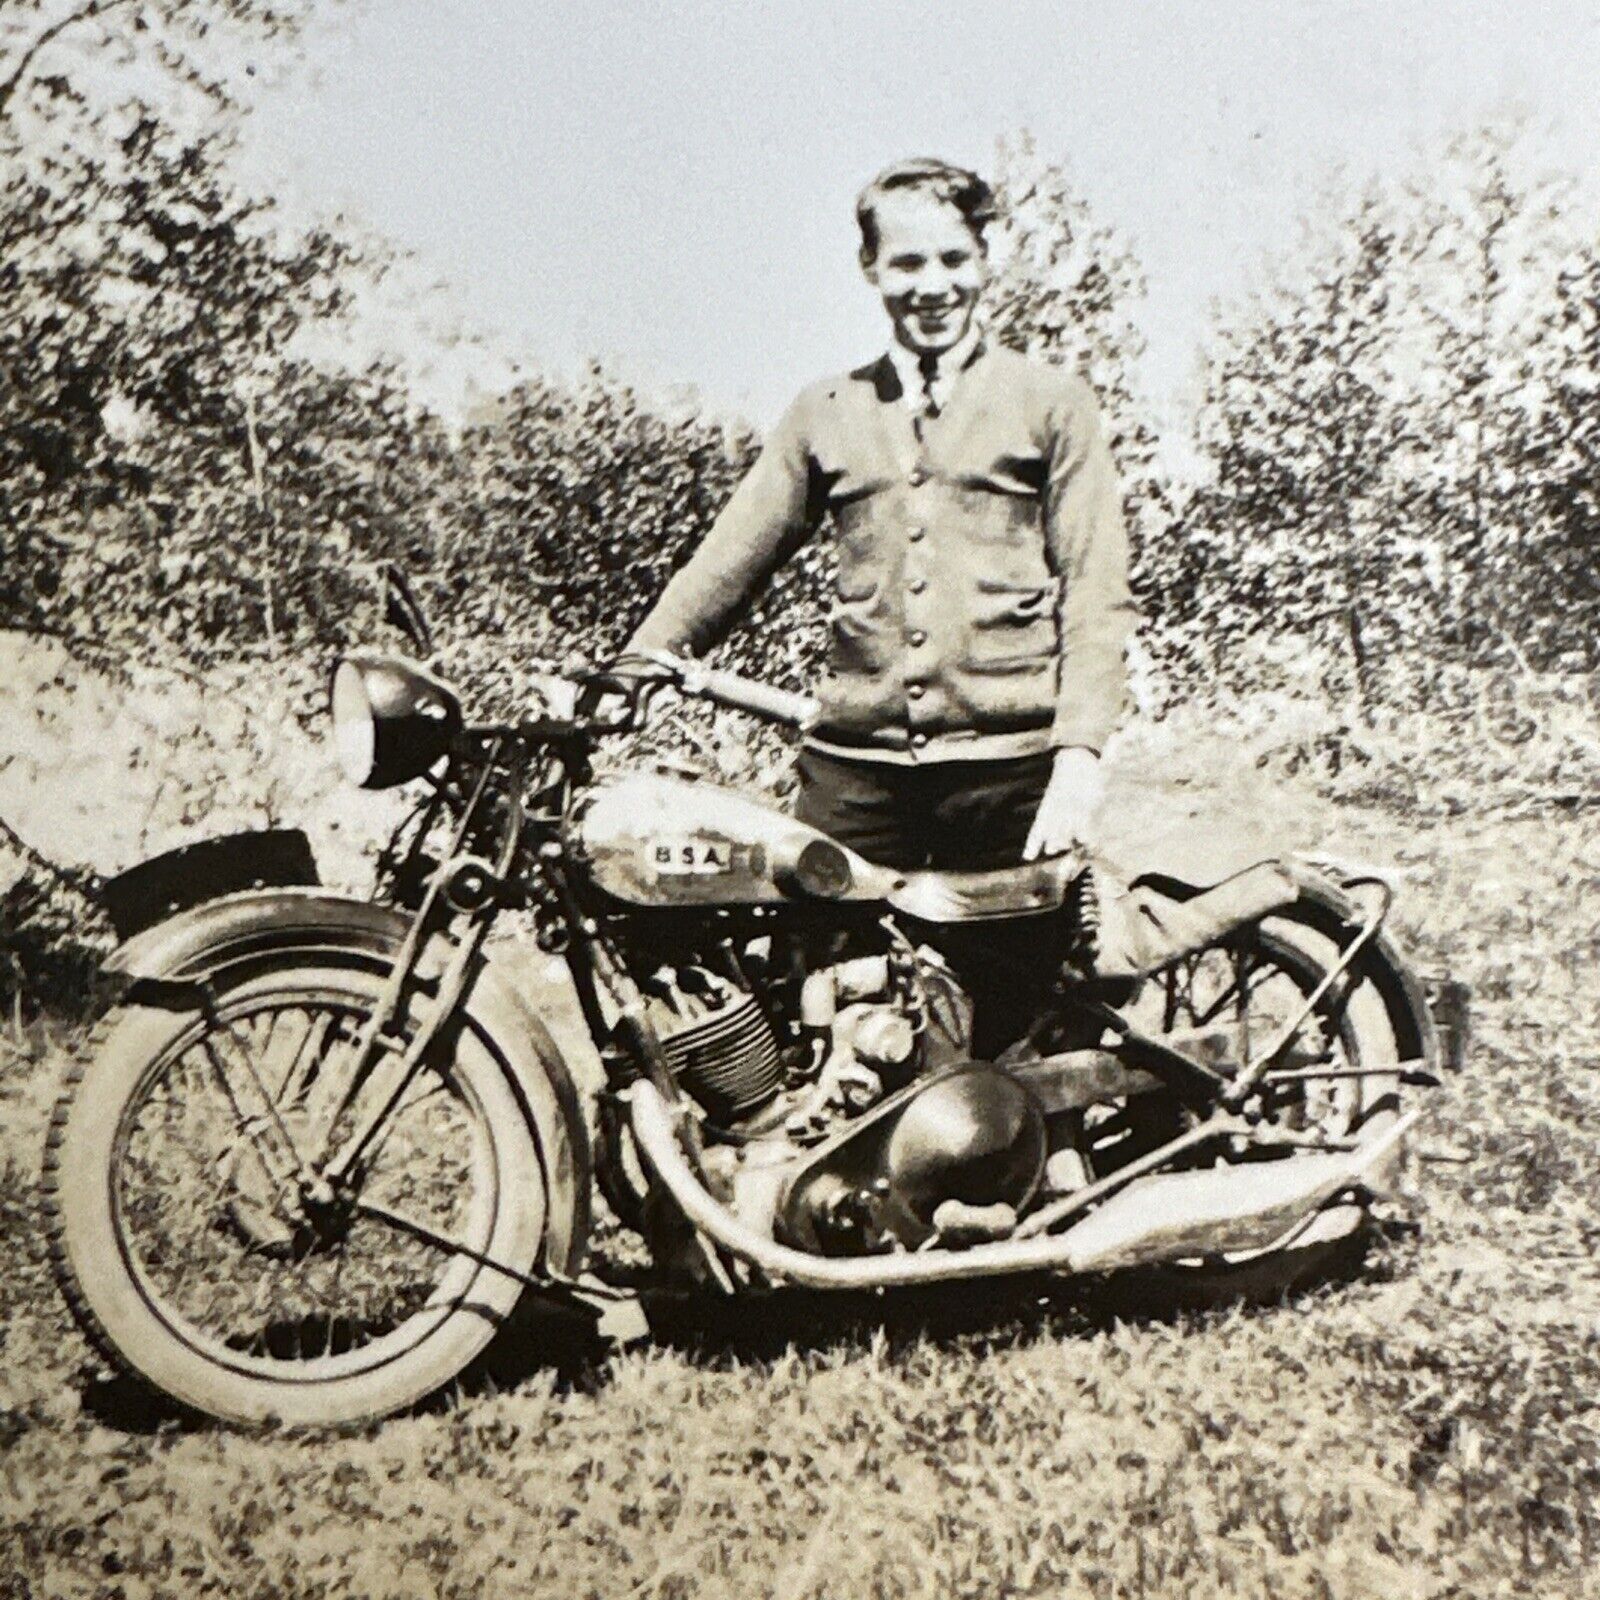 Motorcycle VINTAGE PHOTO 1939 man with motorbike Vancouver Original Snapshot